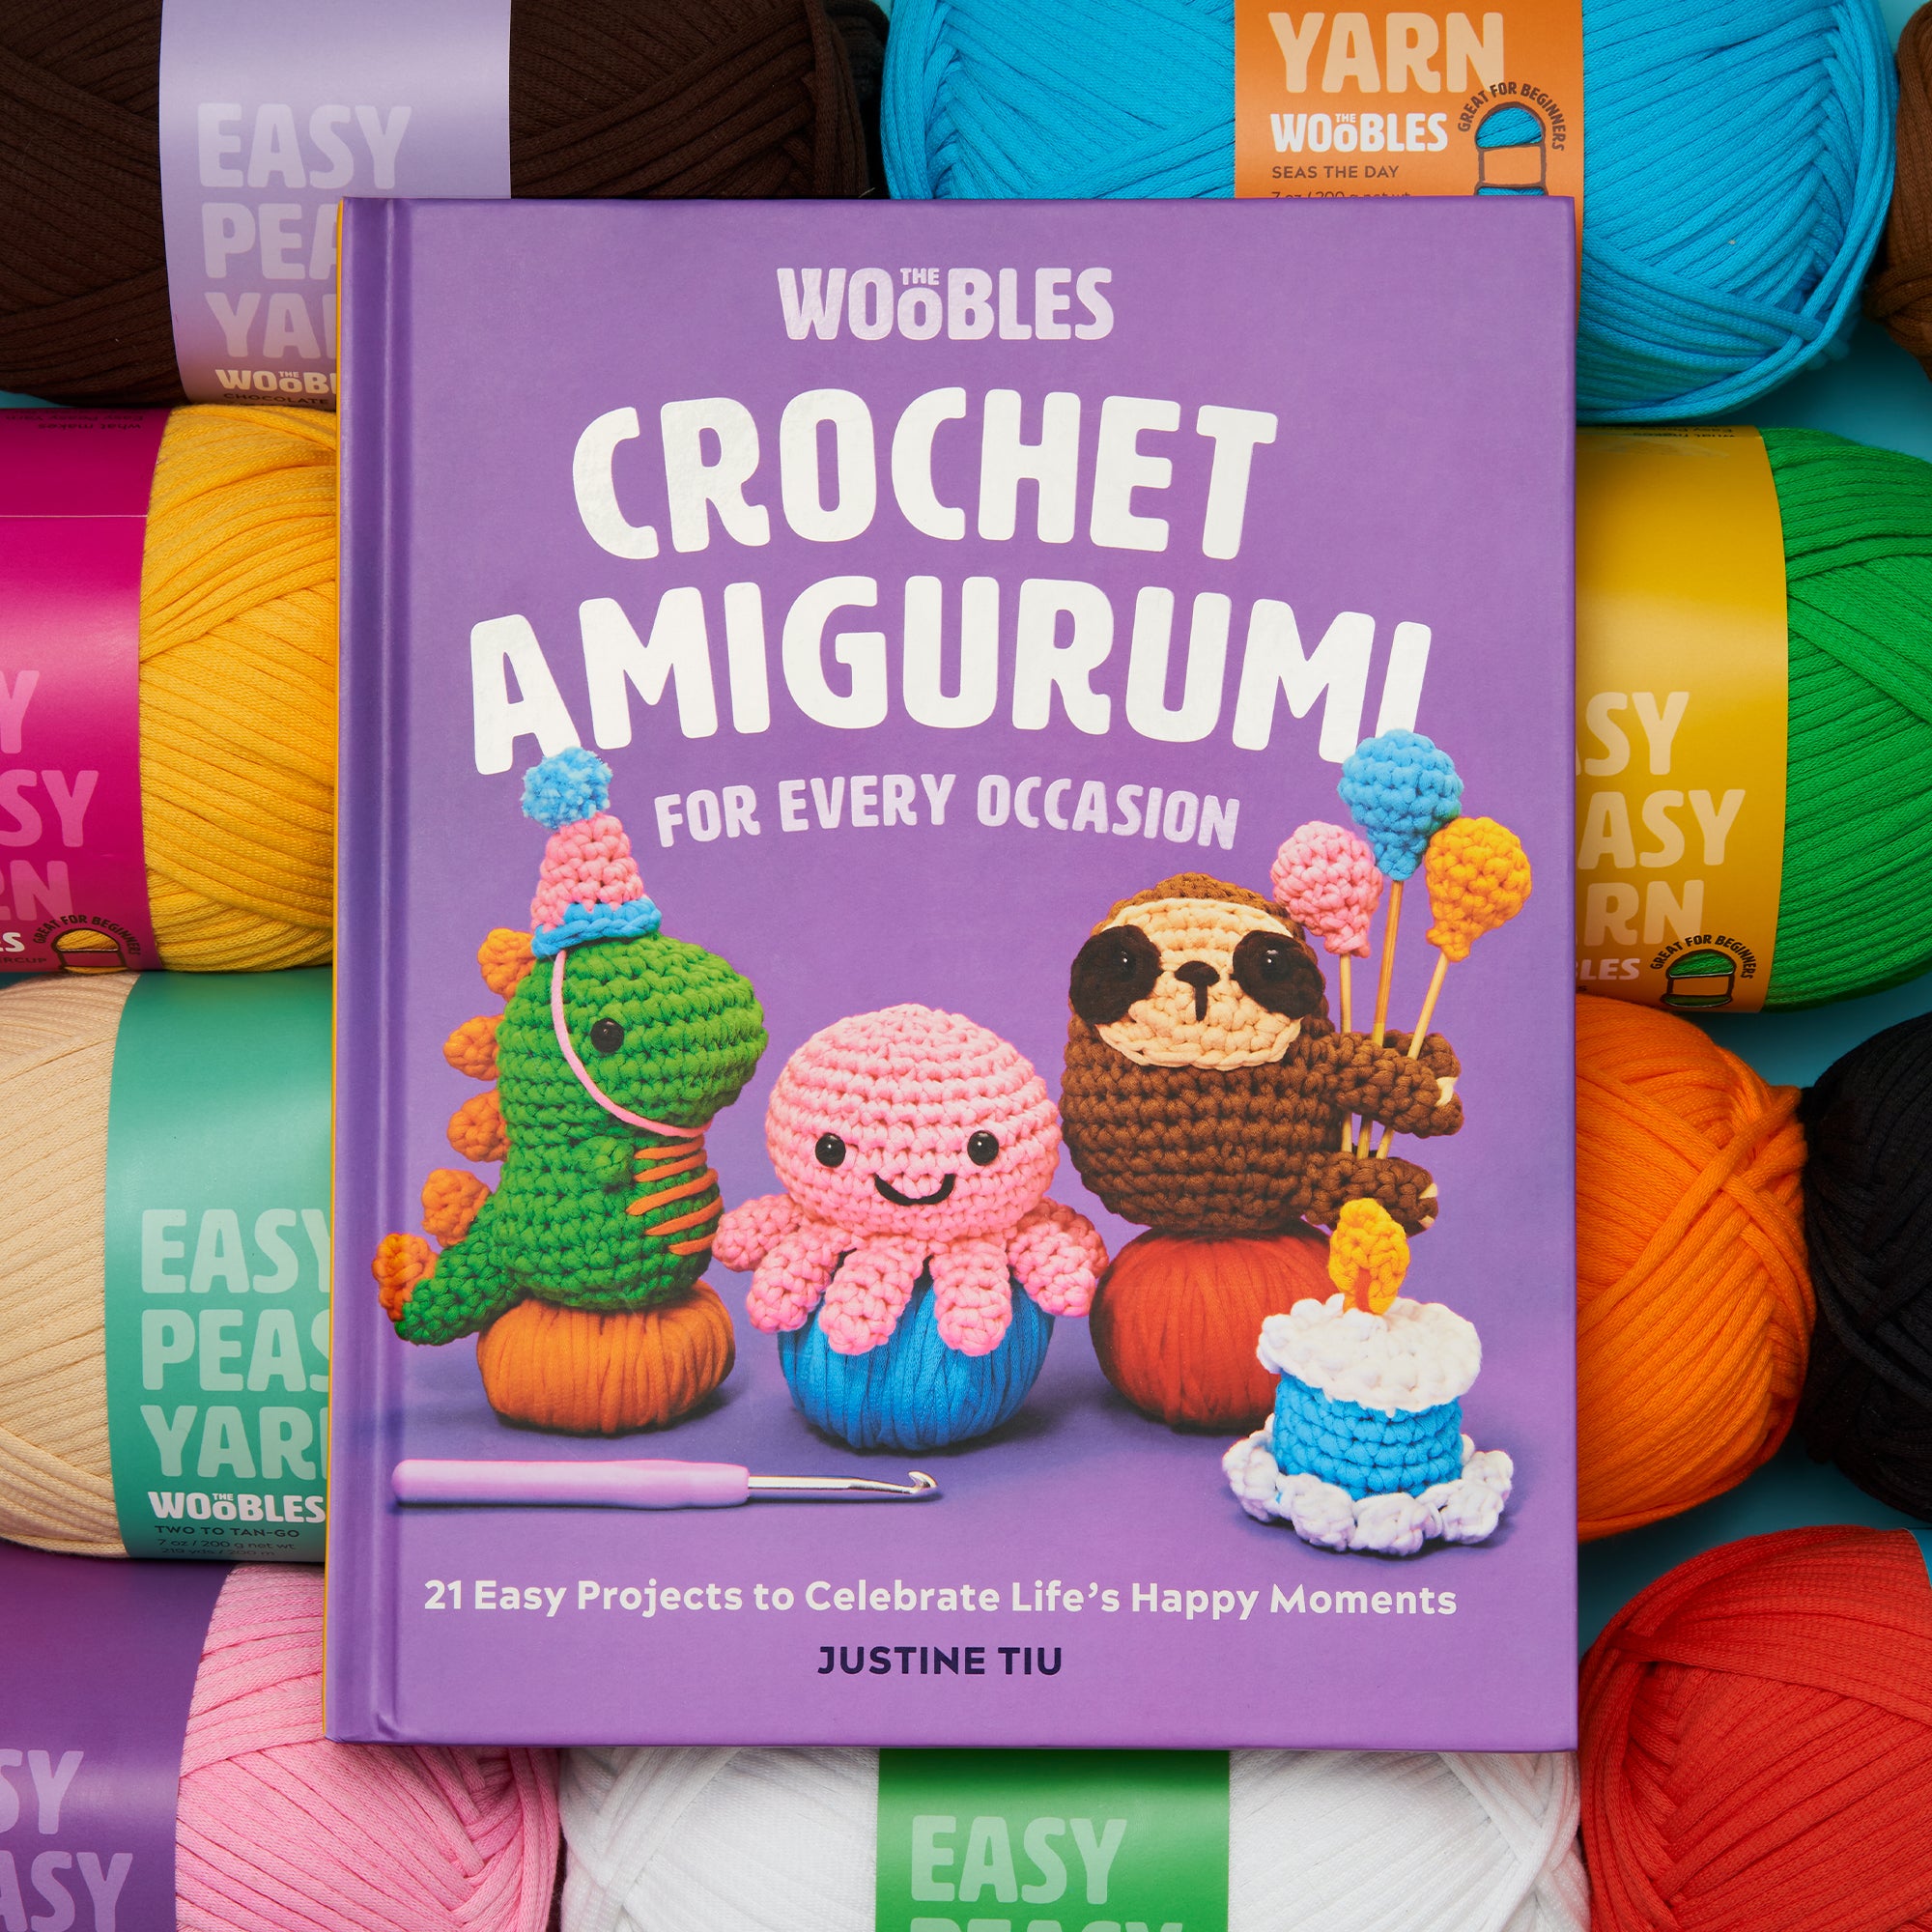 Colorful Crochet Yarn Bundle - 4 Balls